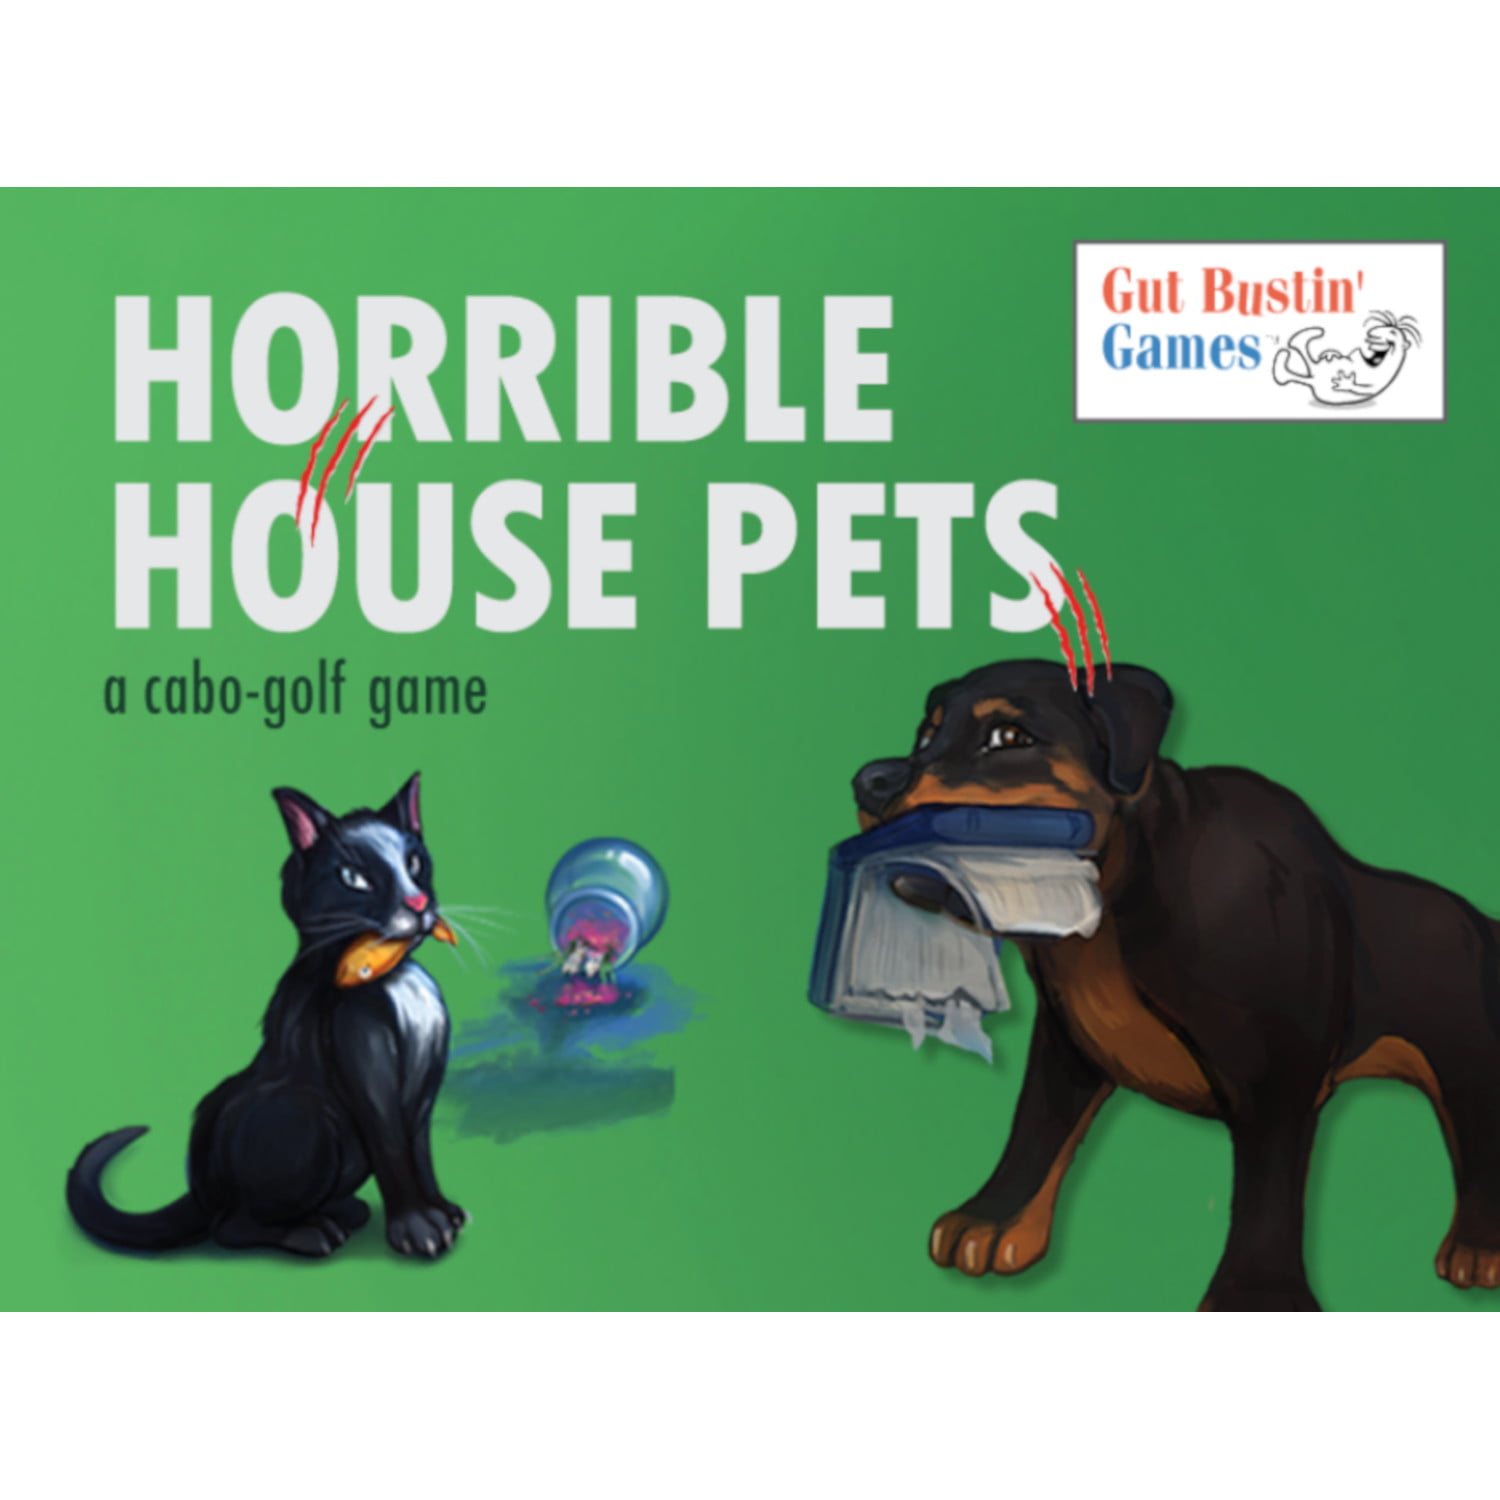 GUT1018 Gut Bustin Games Horrible House Pets Card Game